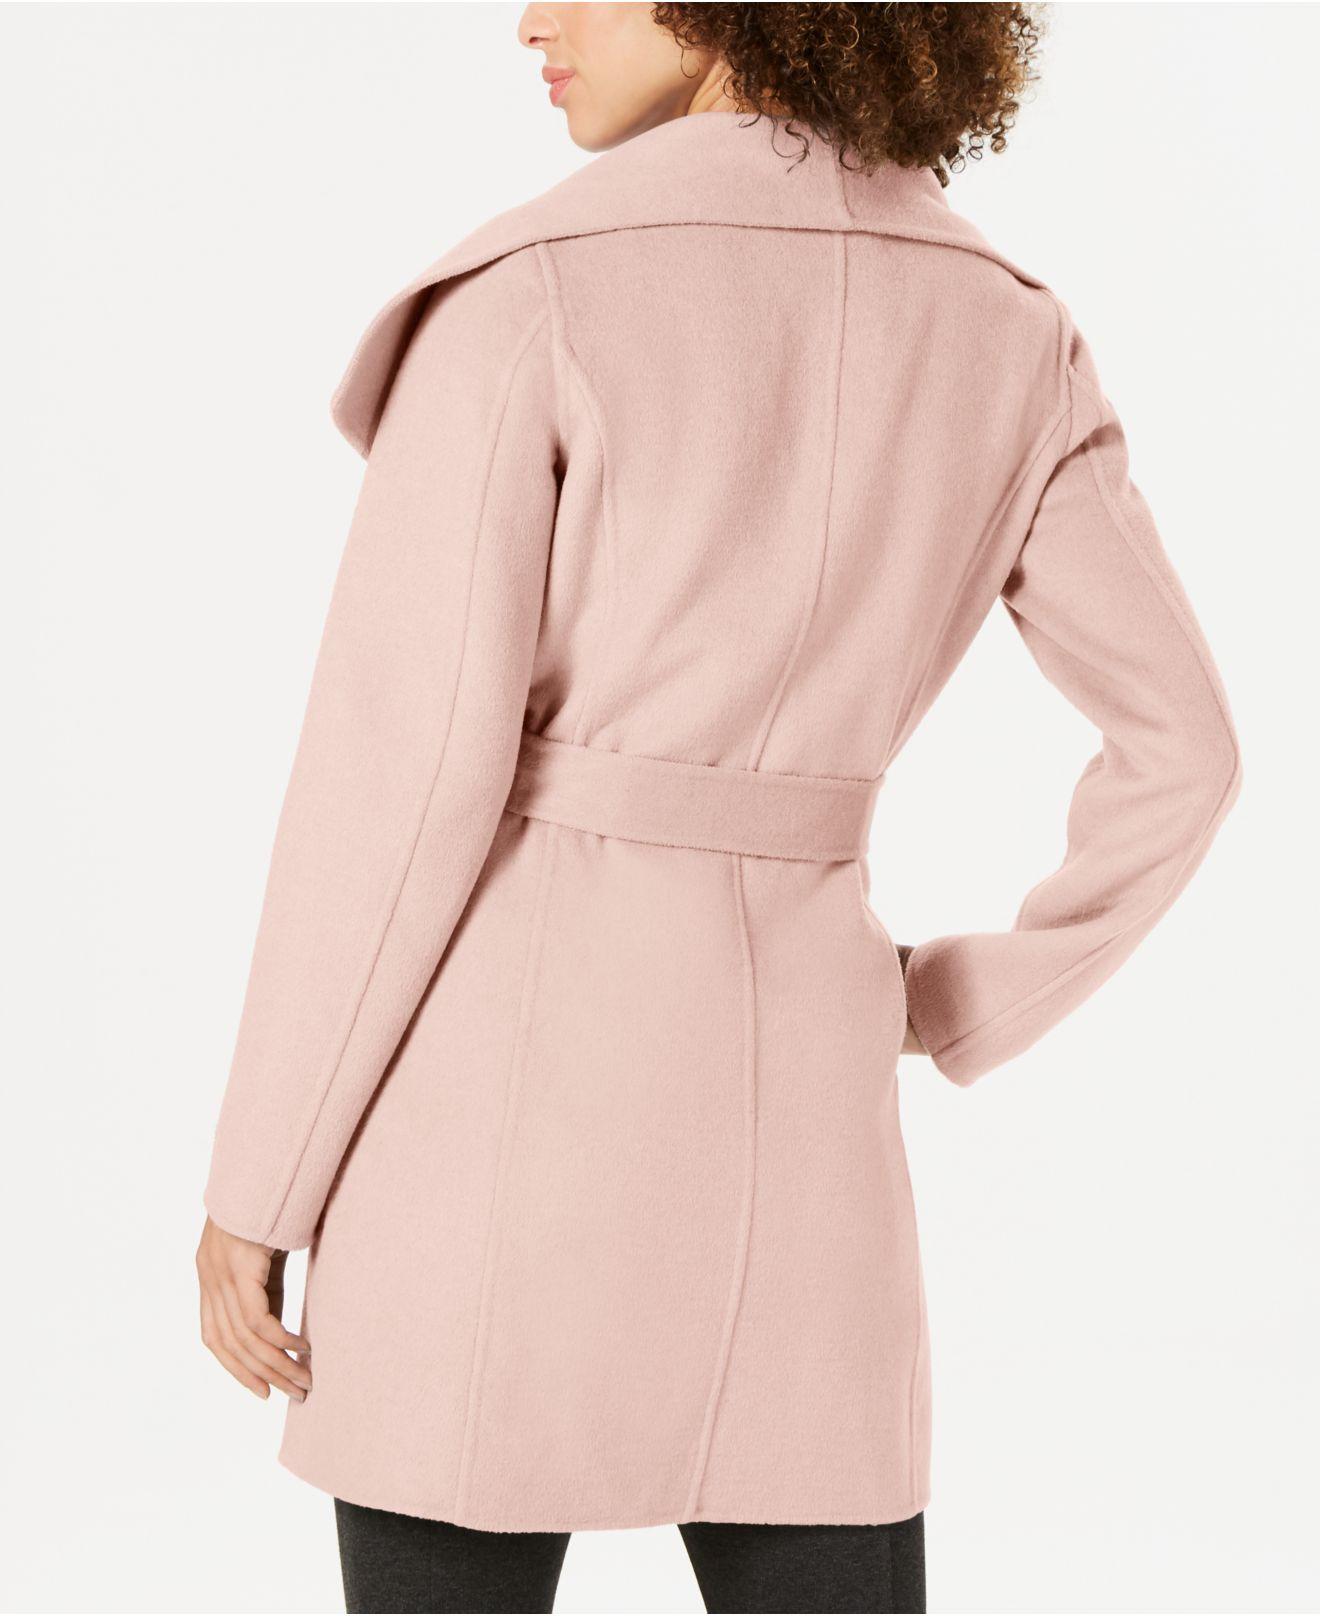 Tahari Wool Wing-collar Wrap Coat in Powder Pink (Pink) - Lyst